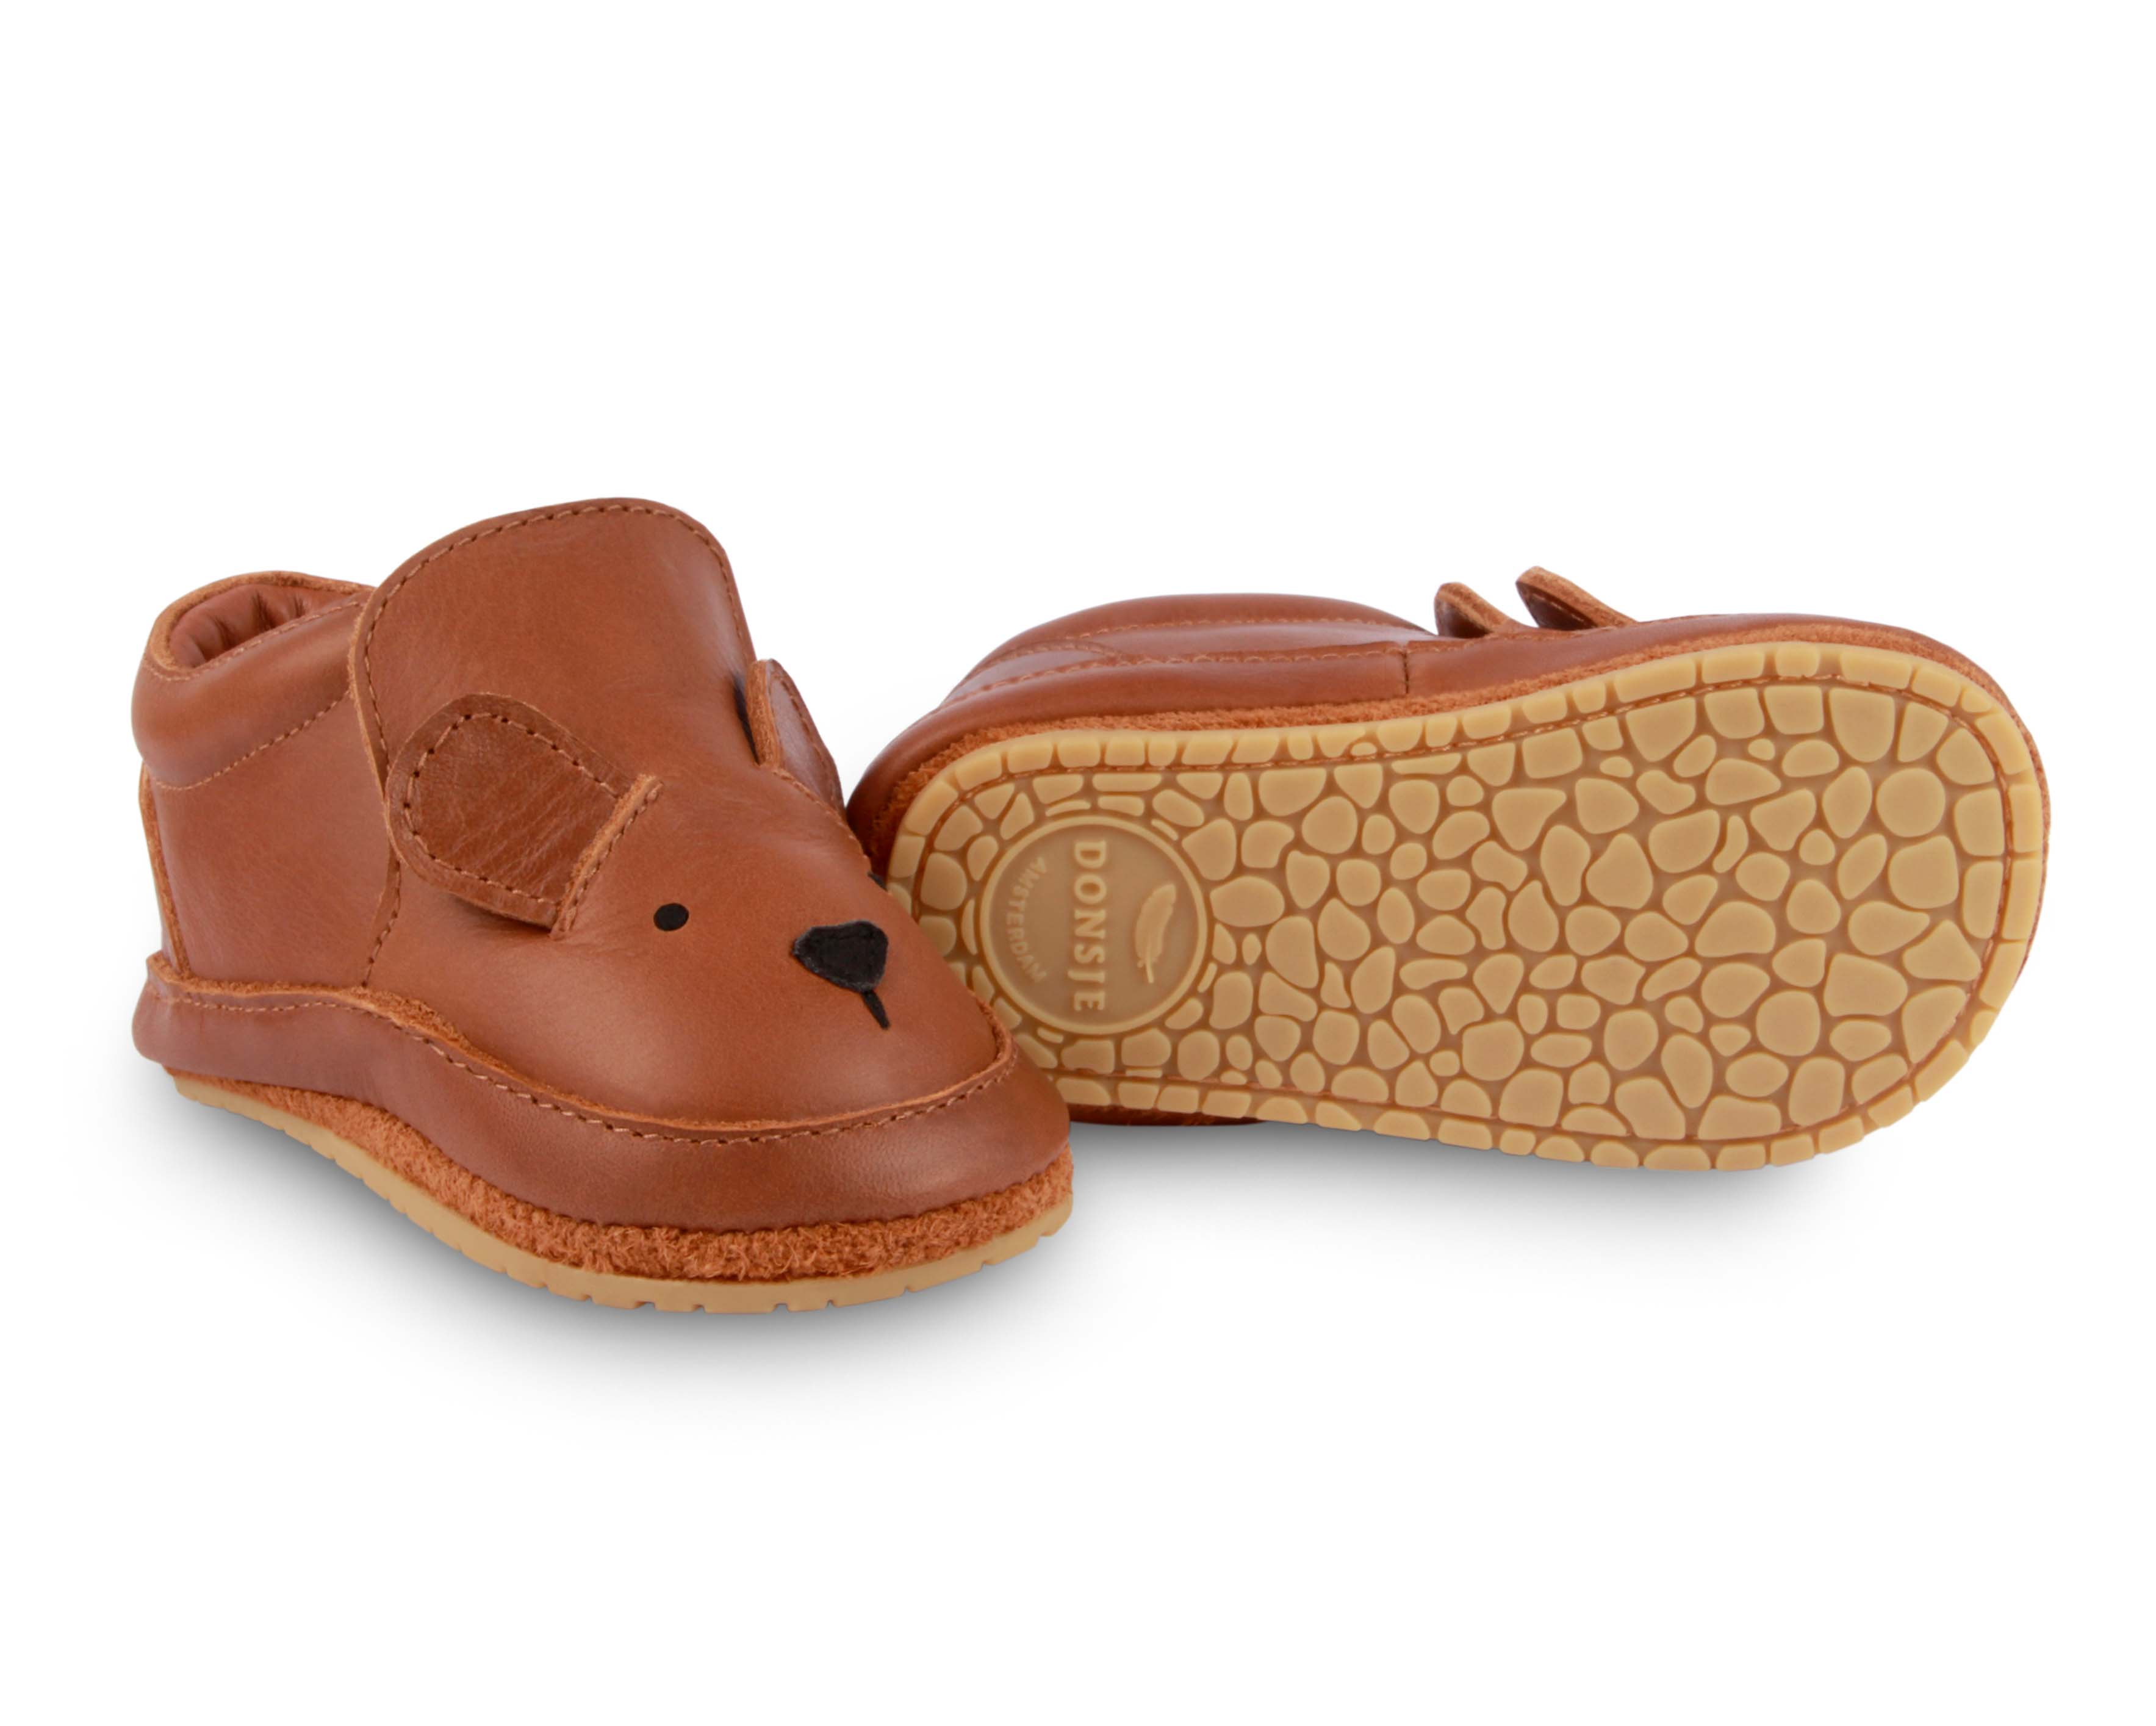 Donsje baby shoes arty bear leather cognac classic flexible rubber sole